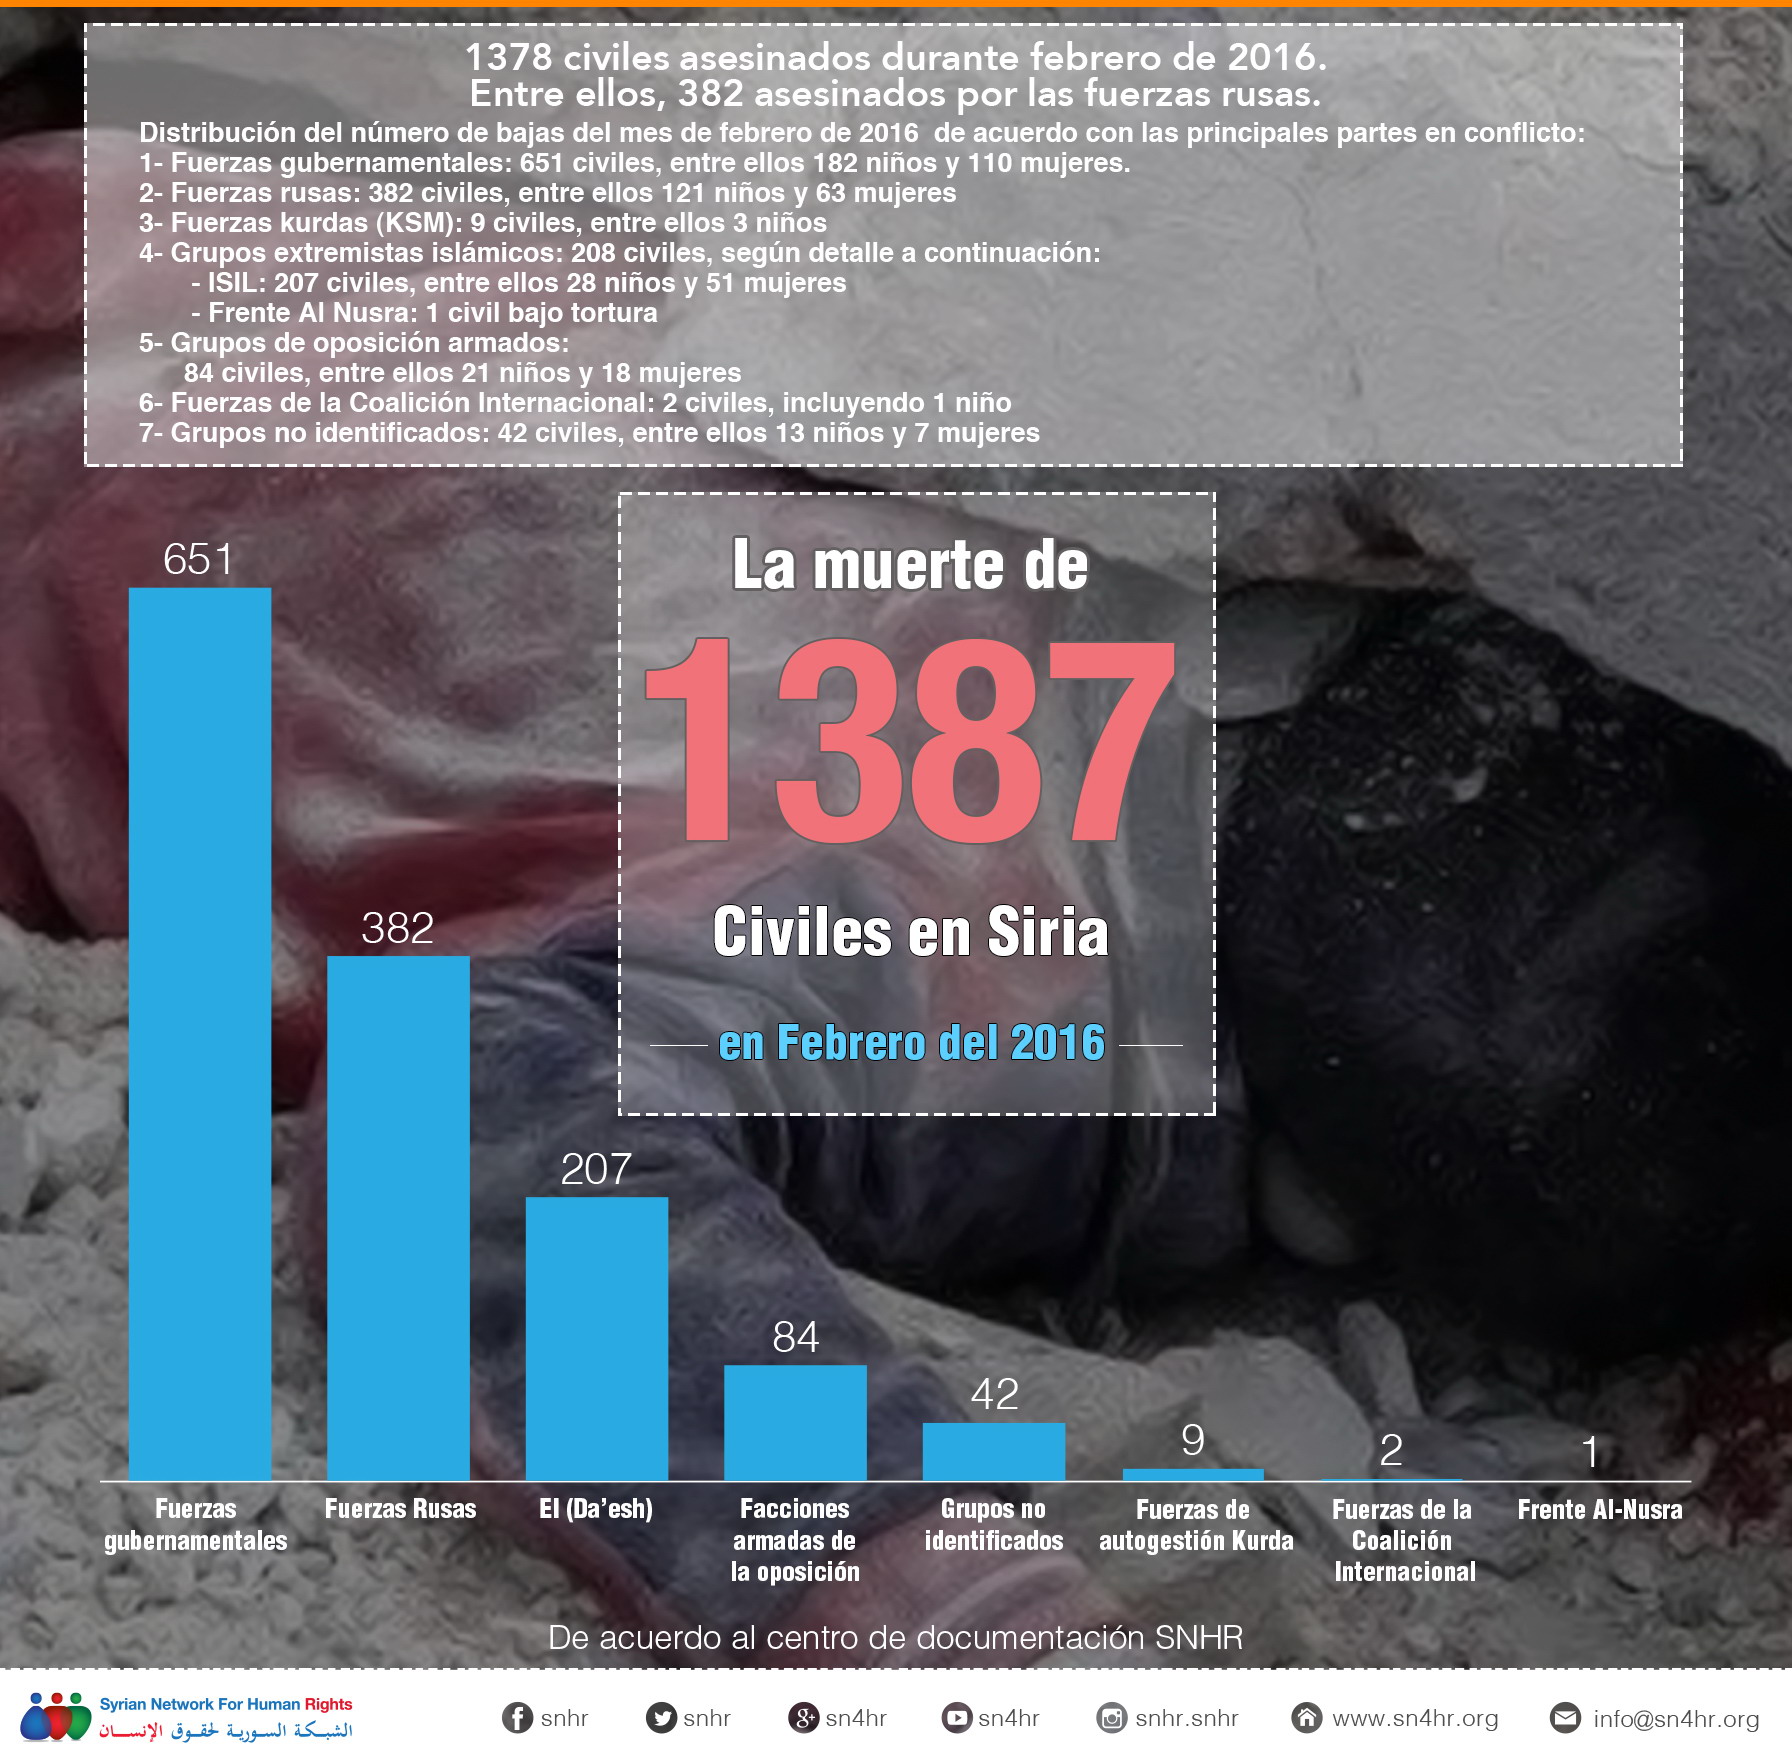 1378 civiles asesinados